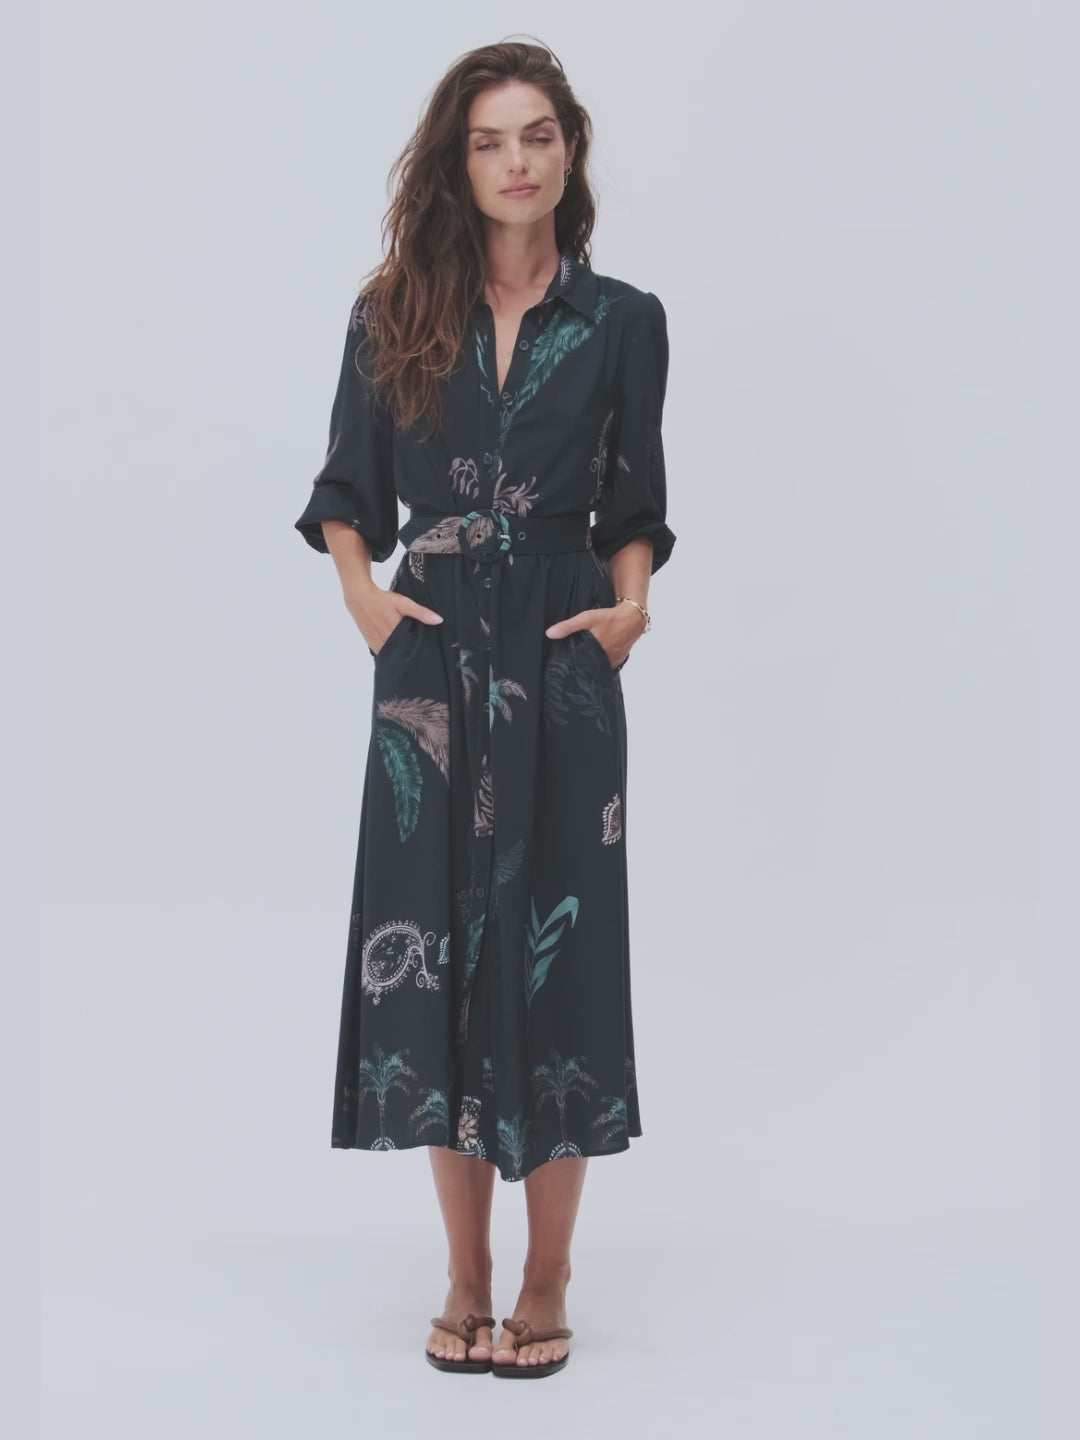 Womens boho long sleeve maxi shirt dress with belt teal palm tree print studio studio video